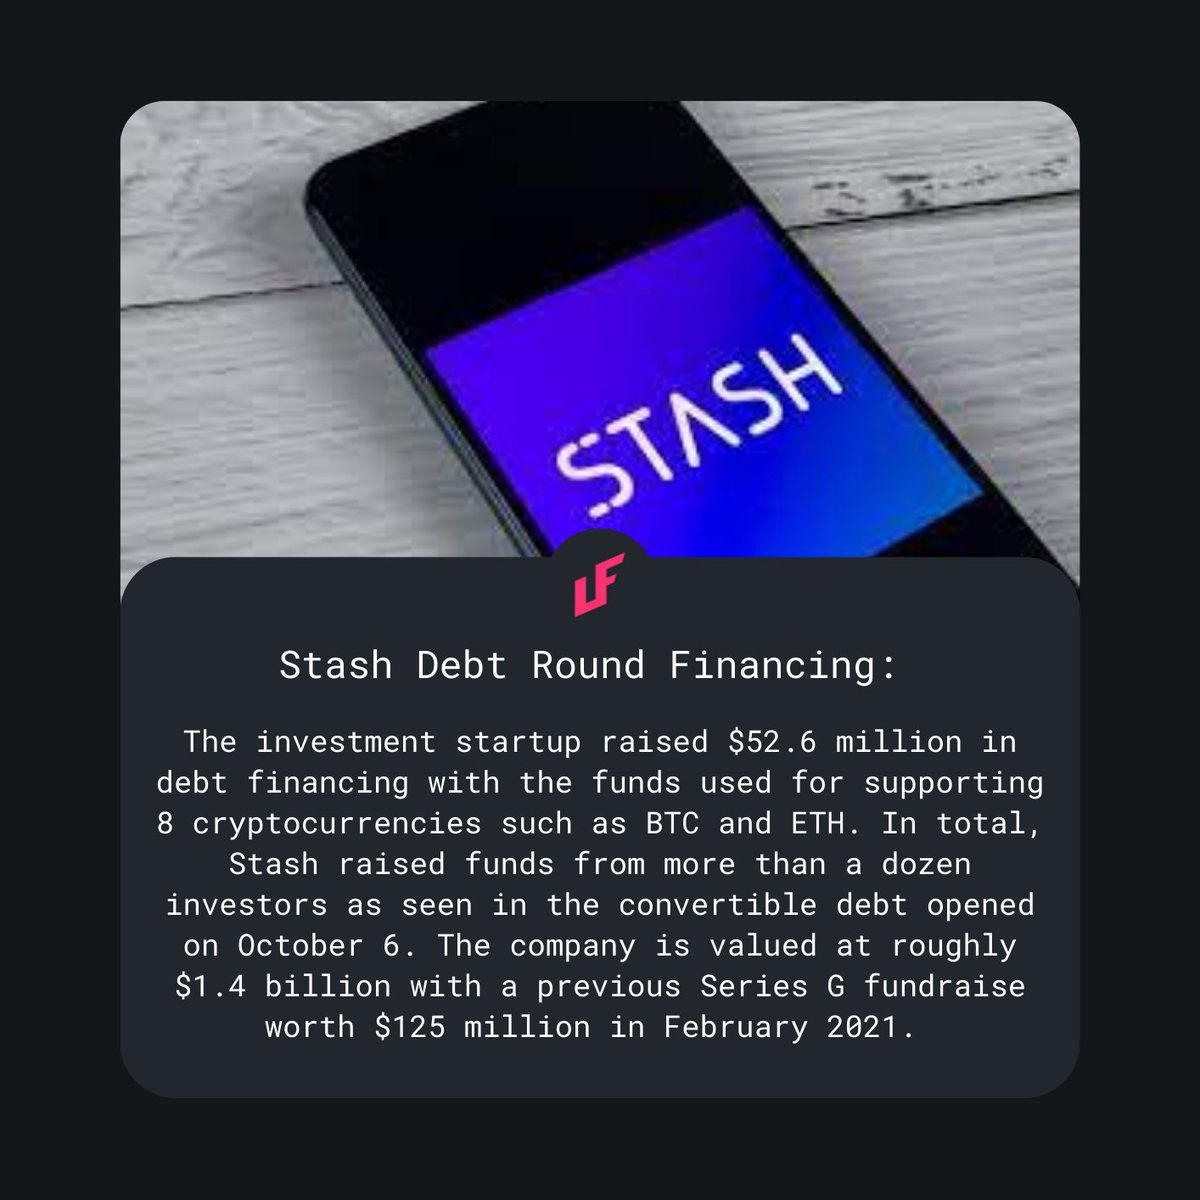 STASH valued at $1.4 billion.